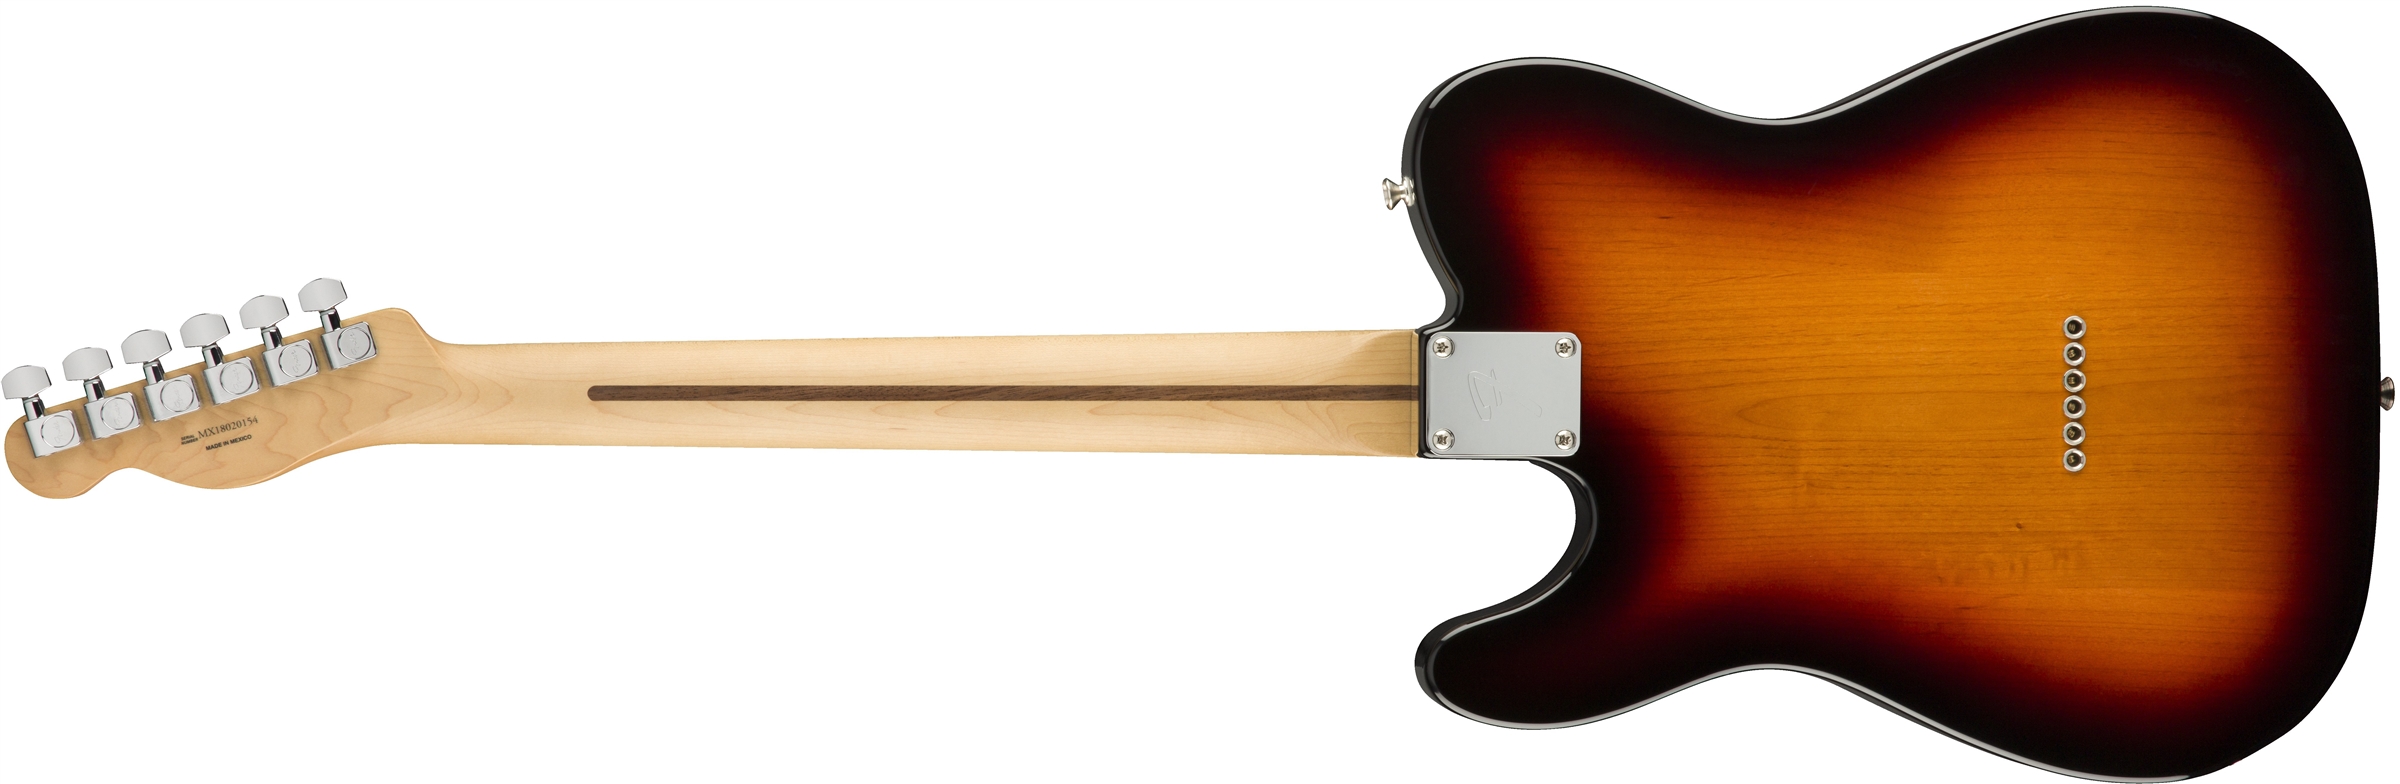 Fender Tele Player Mex Ss Pf - 3-color Sunburst - Guitarra eléctrica con forma de tel - Variation 1